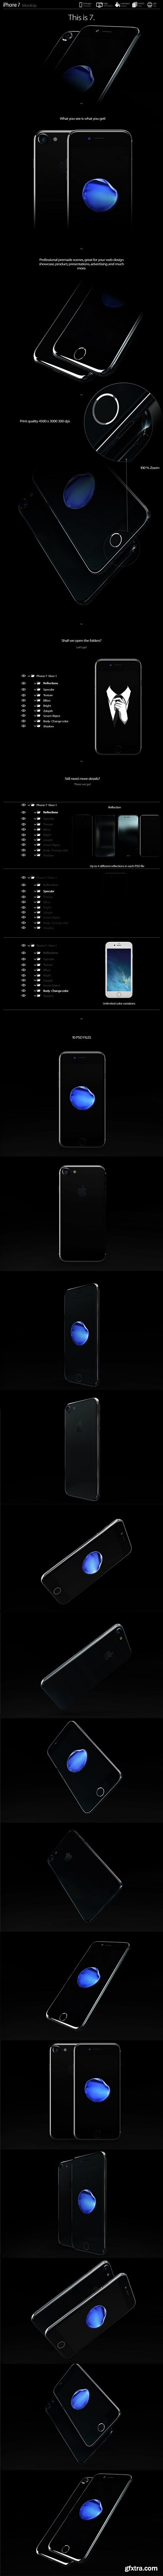 CM - iPhone 7 Jet Black Edition Mock Up 1115583